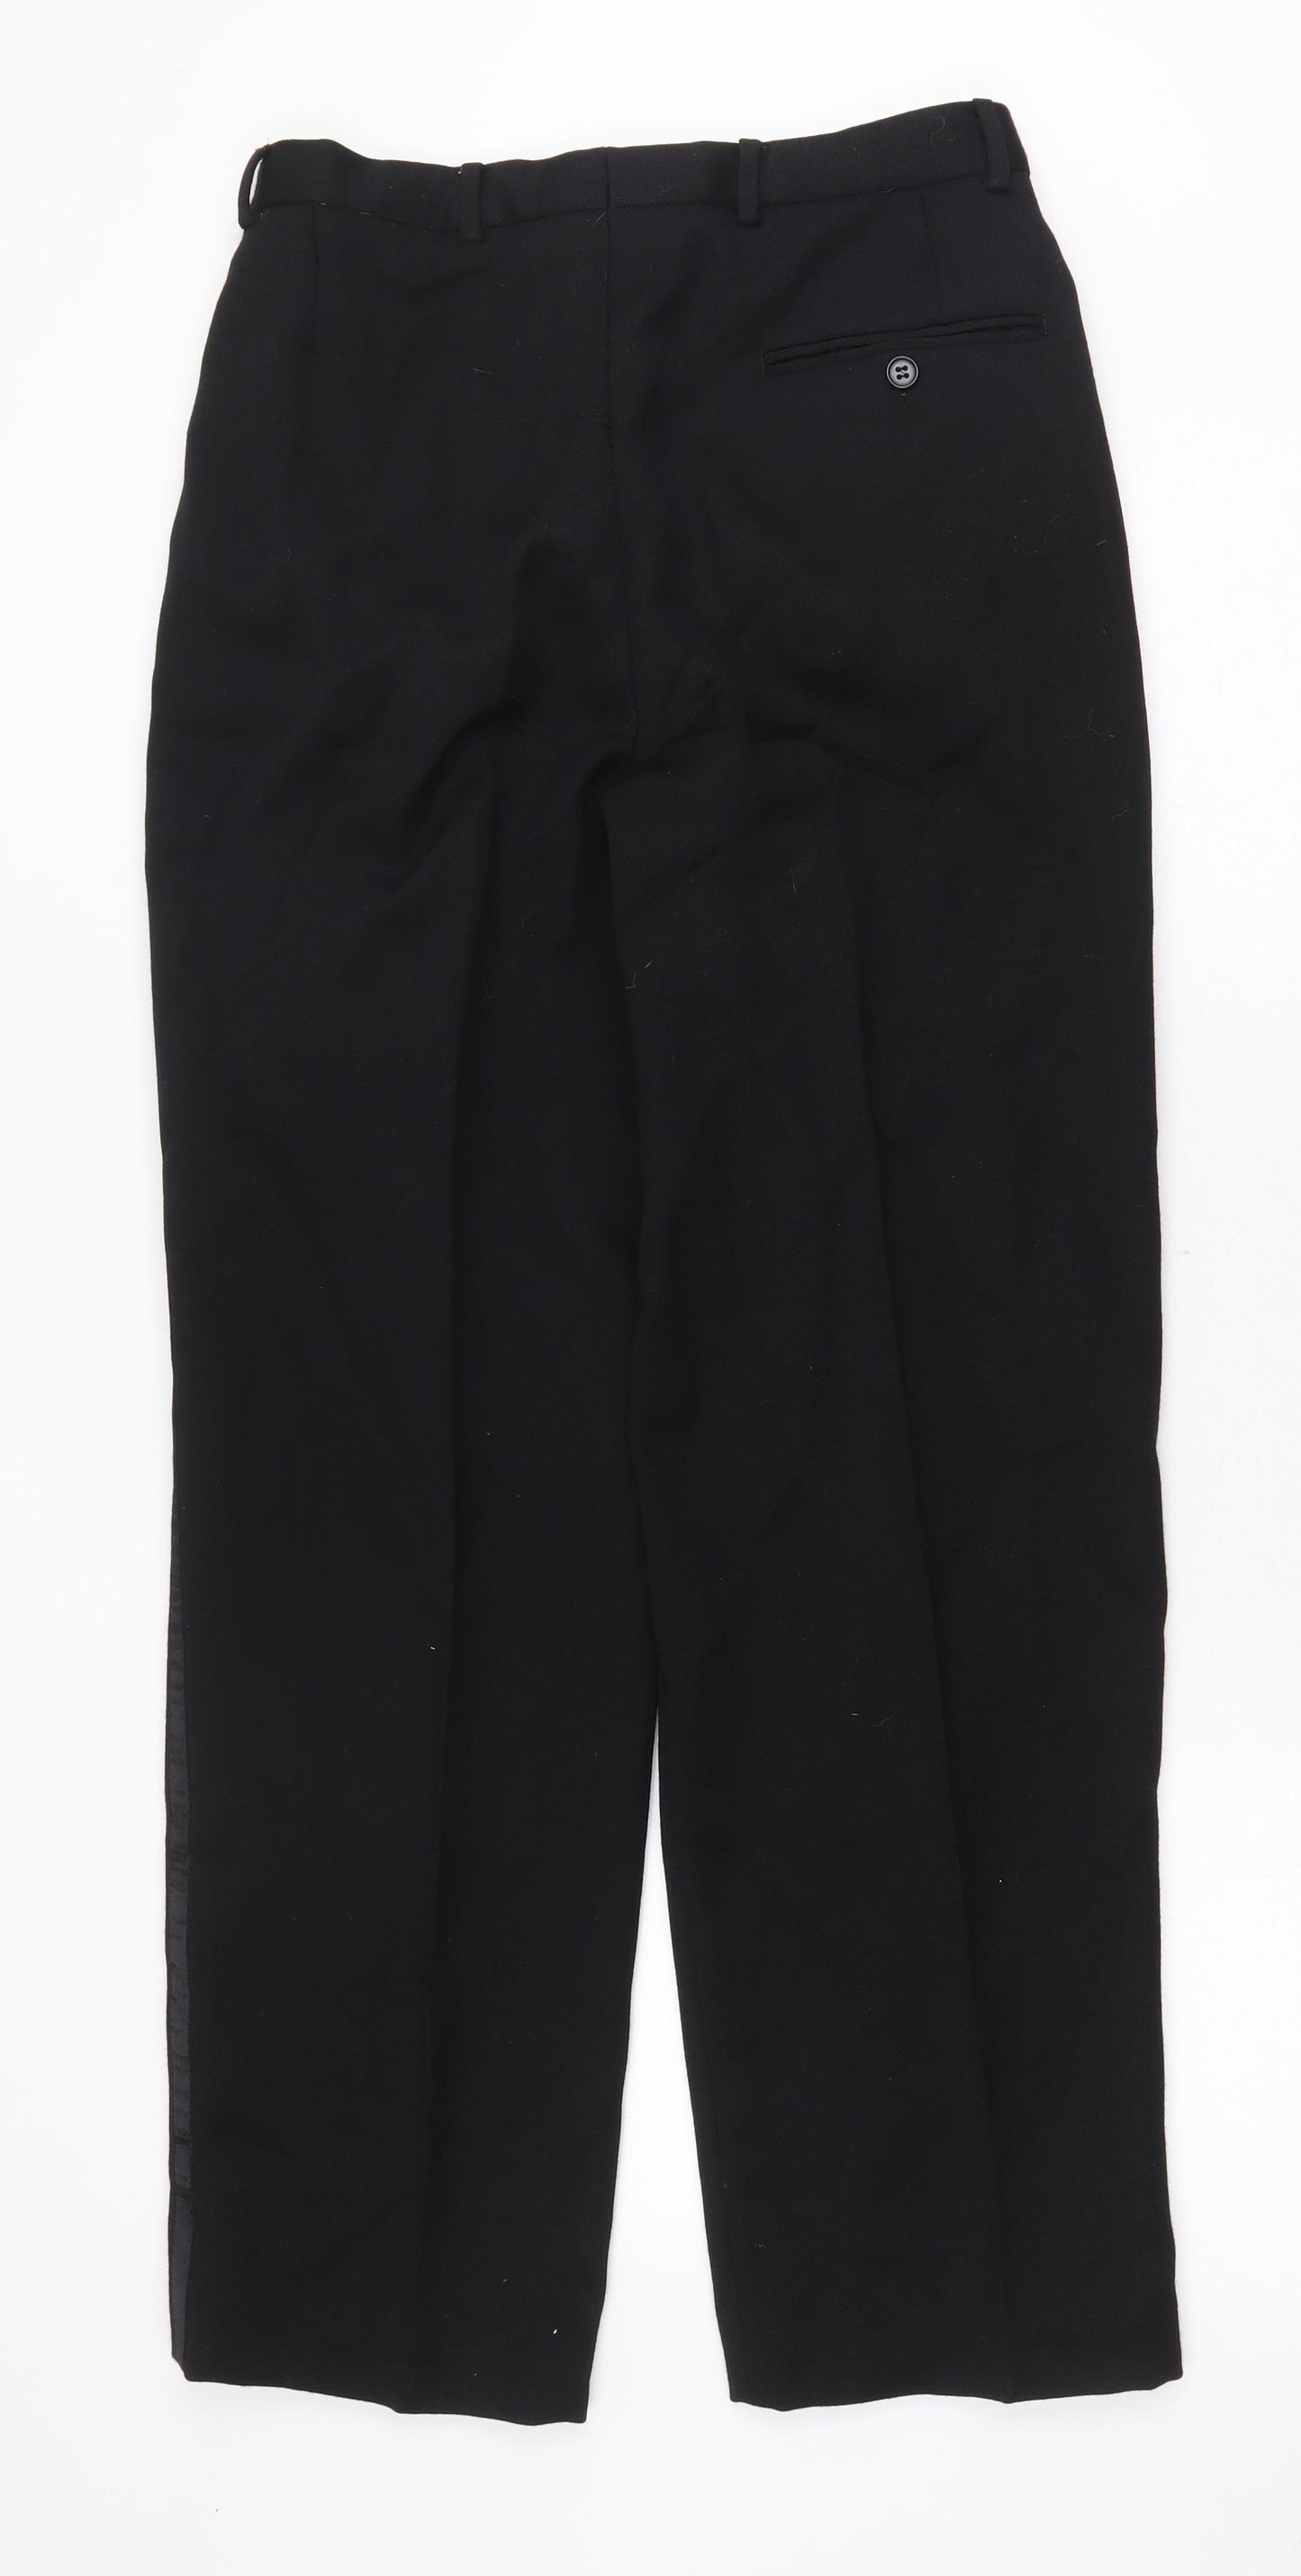 NEXT Mens Black Wool Dress Pants Trousers Size 30 in Regular Zip